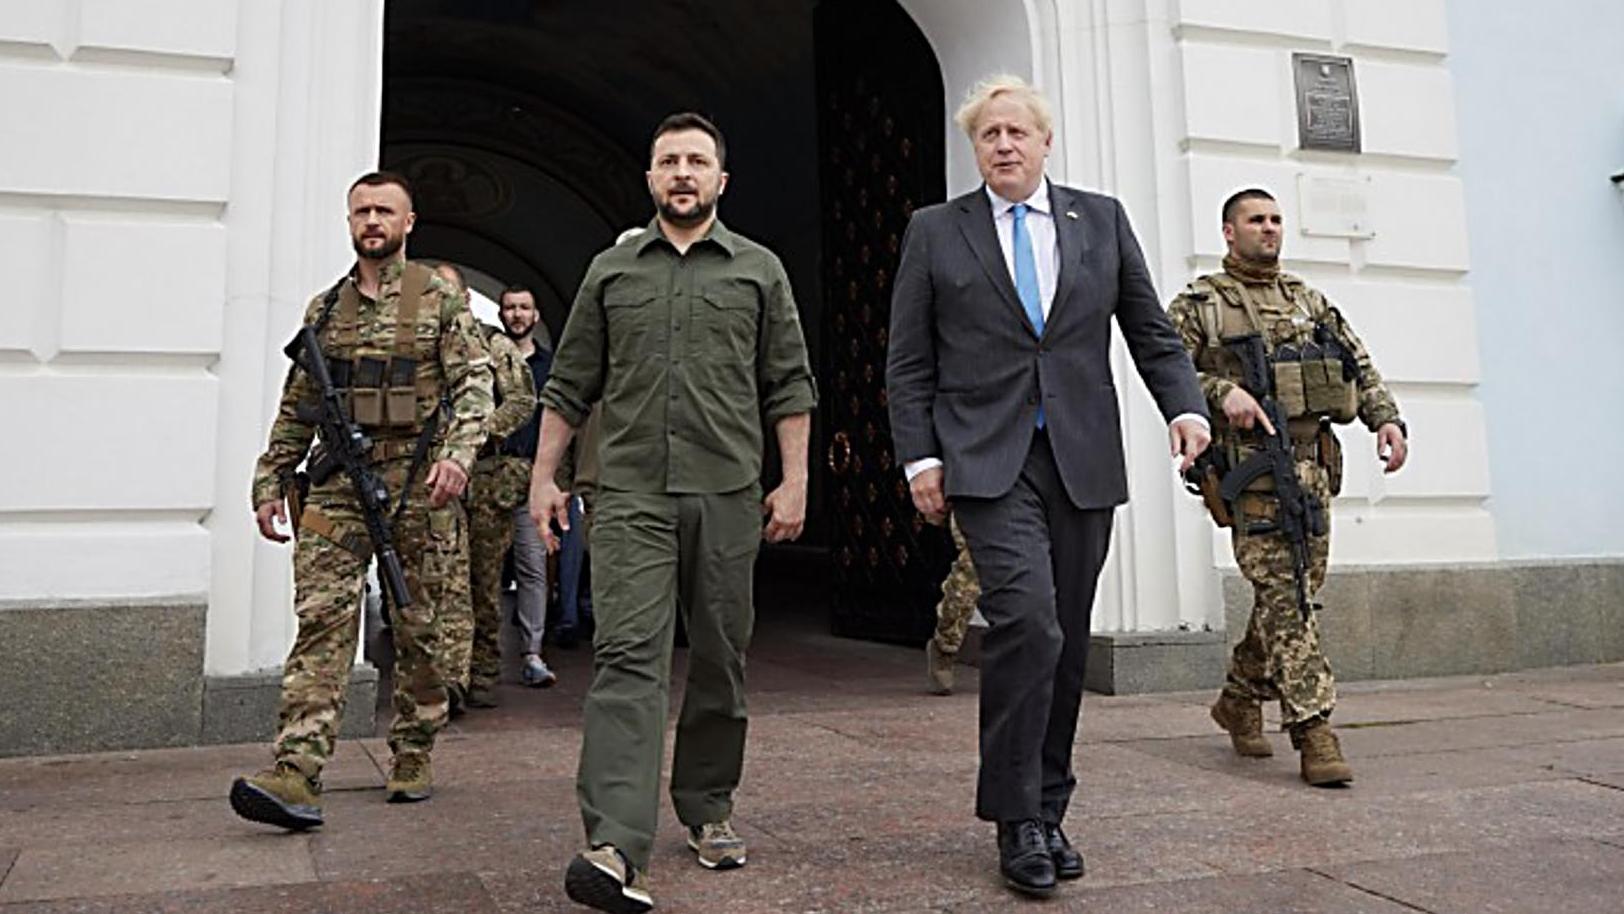 Boris Johnson: We will never be secure if we turn our backs on valiant Ukraine